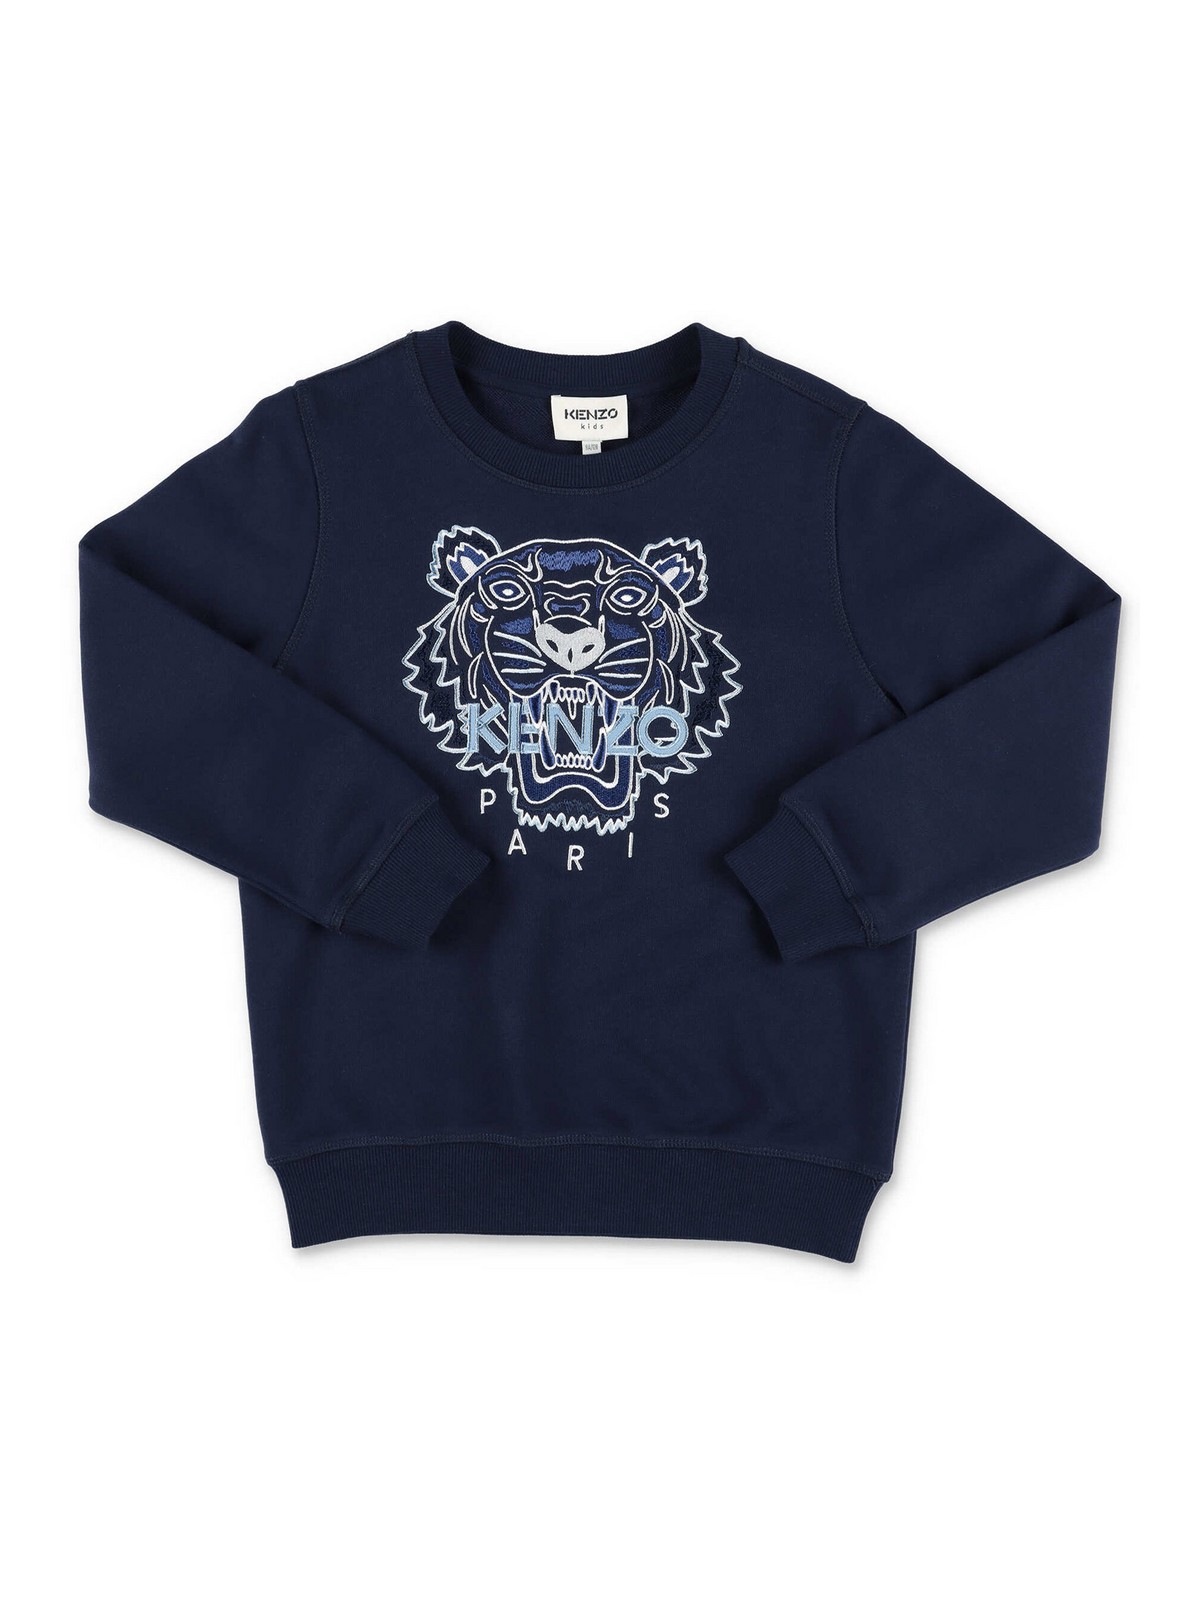 Sweatshirts - Tiger navy blue cotton sweatshirt -